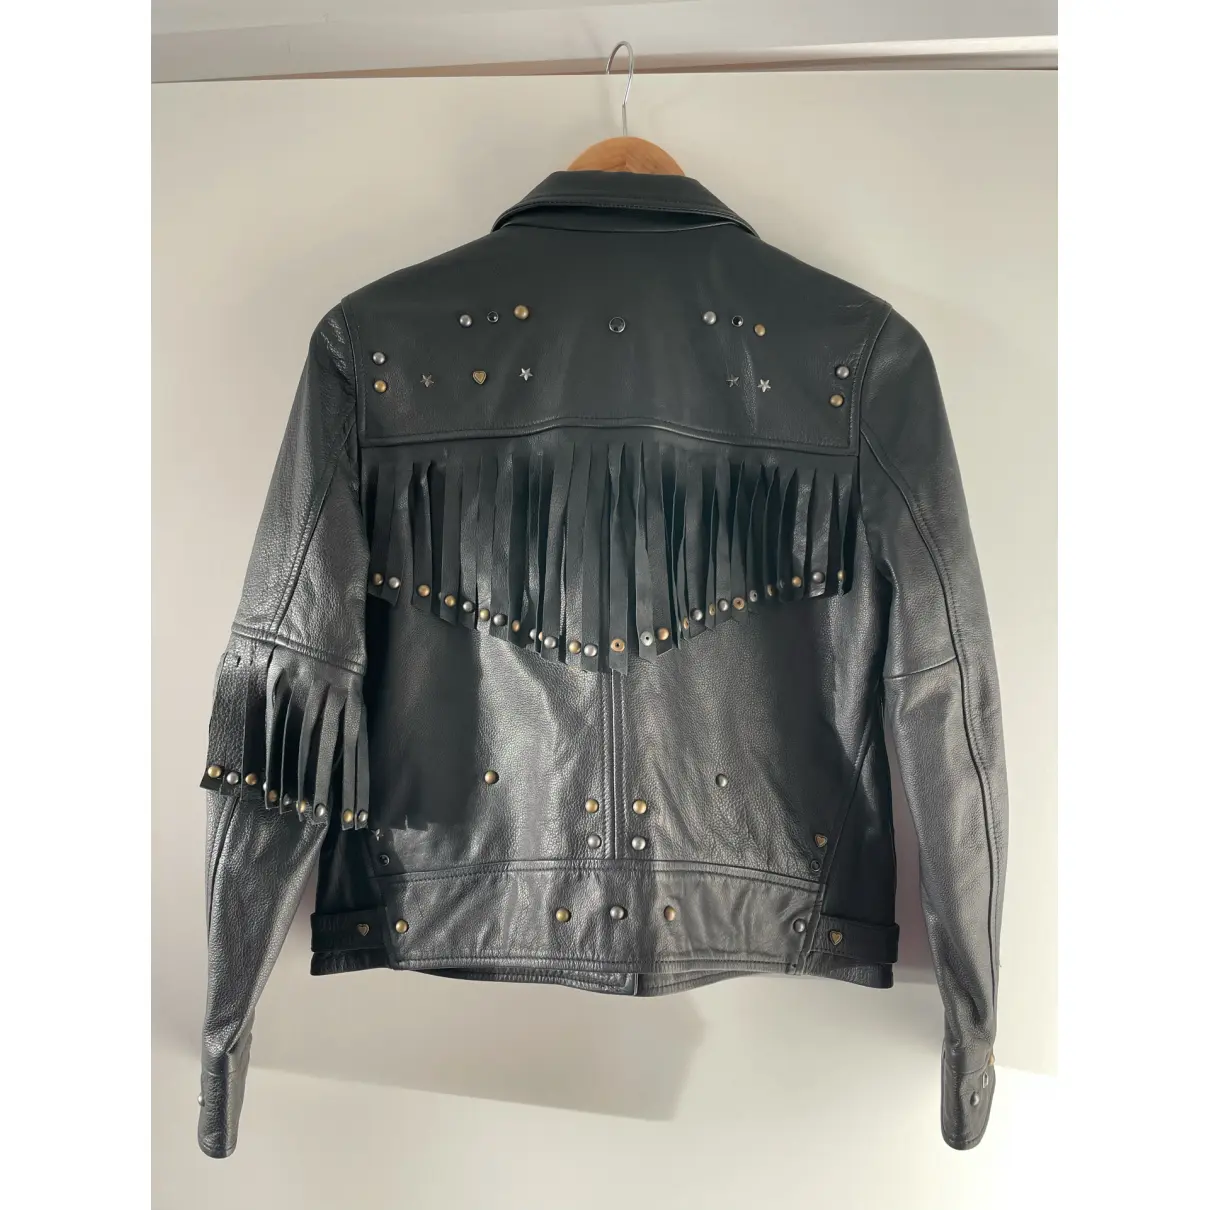 Buy The Kooples Leather biker jacket online